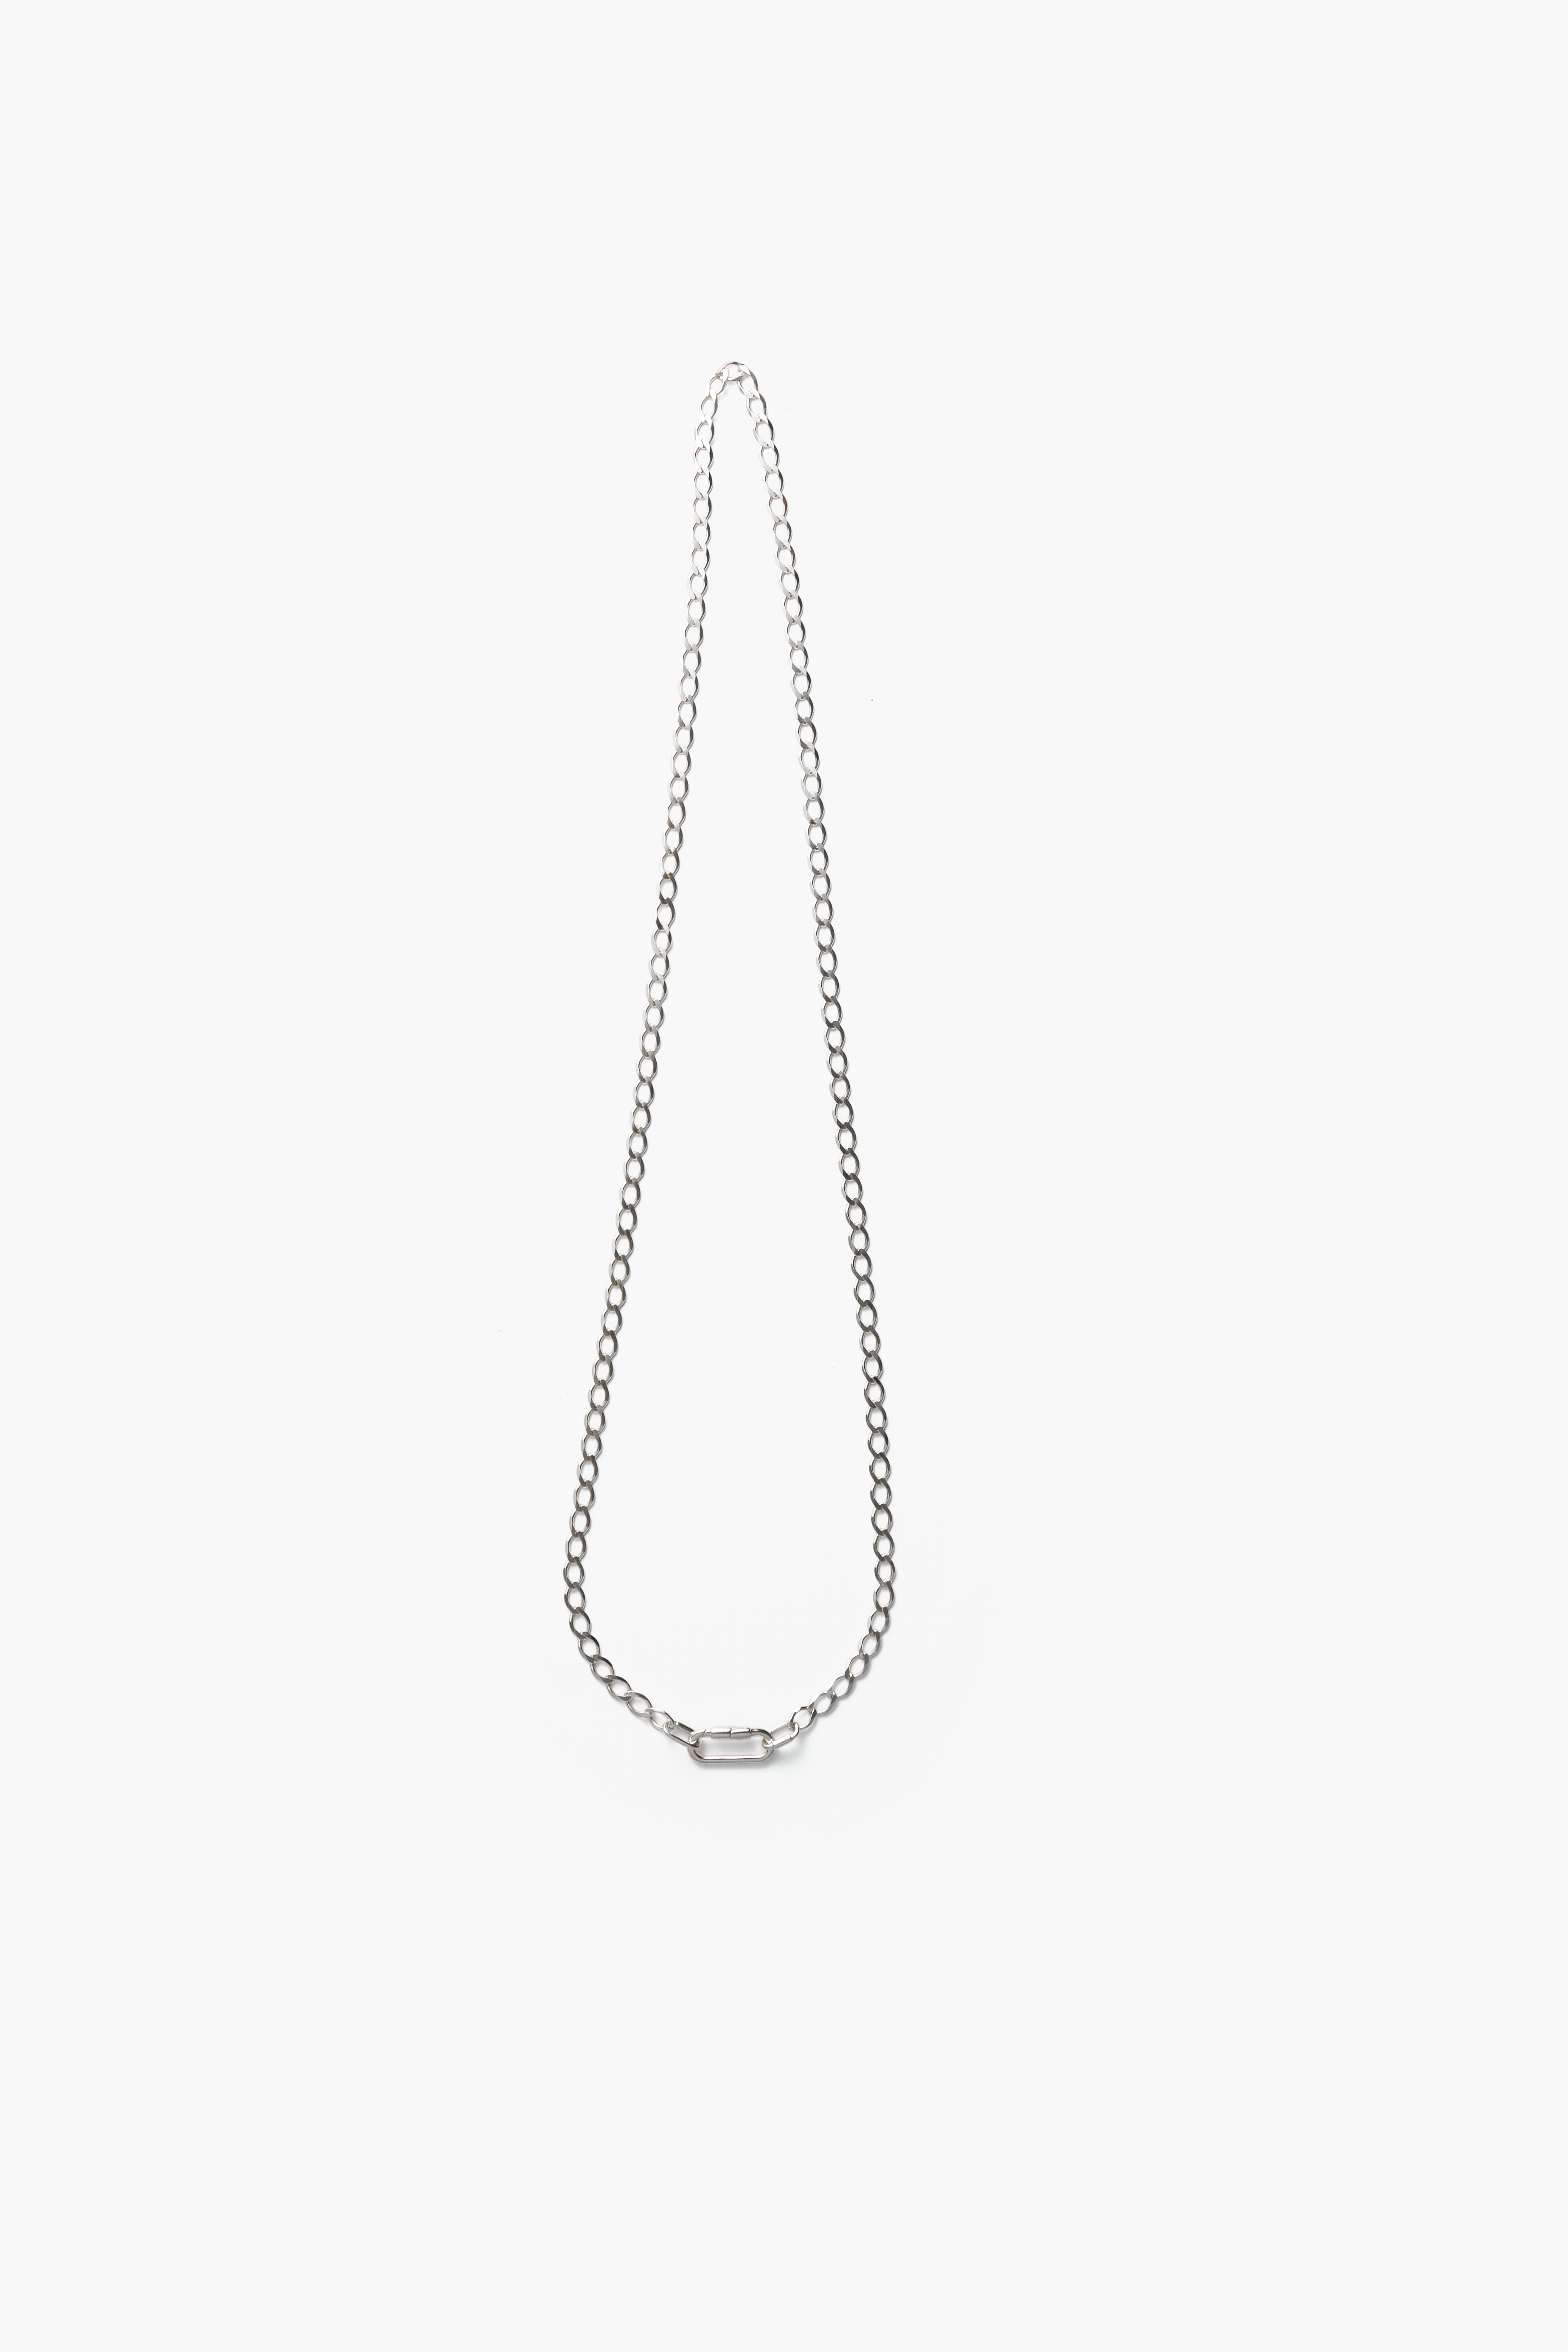 Nordhavn 55 Necklace - Silver